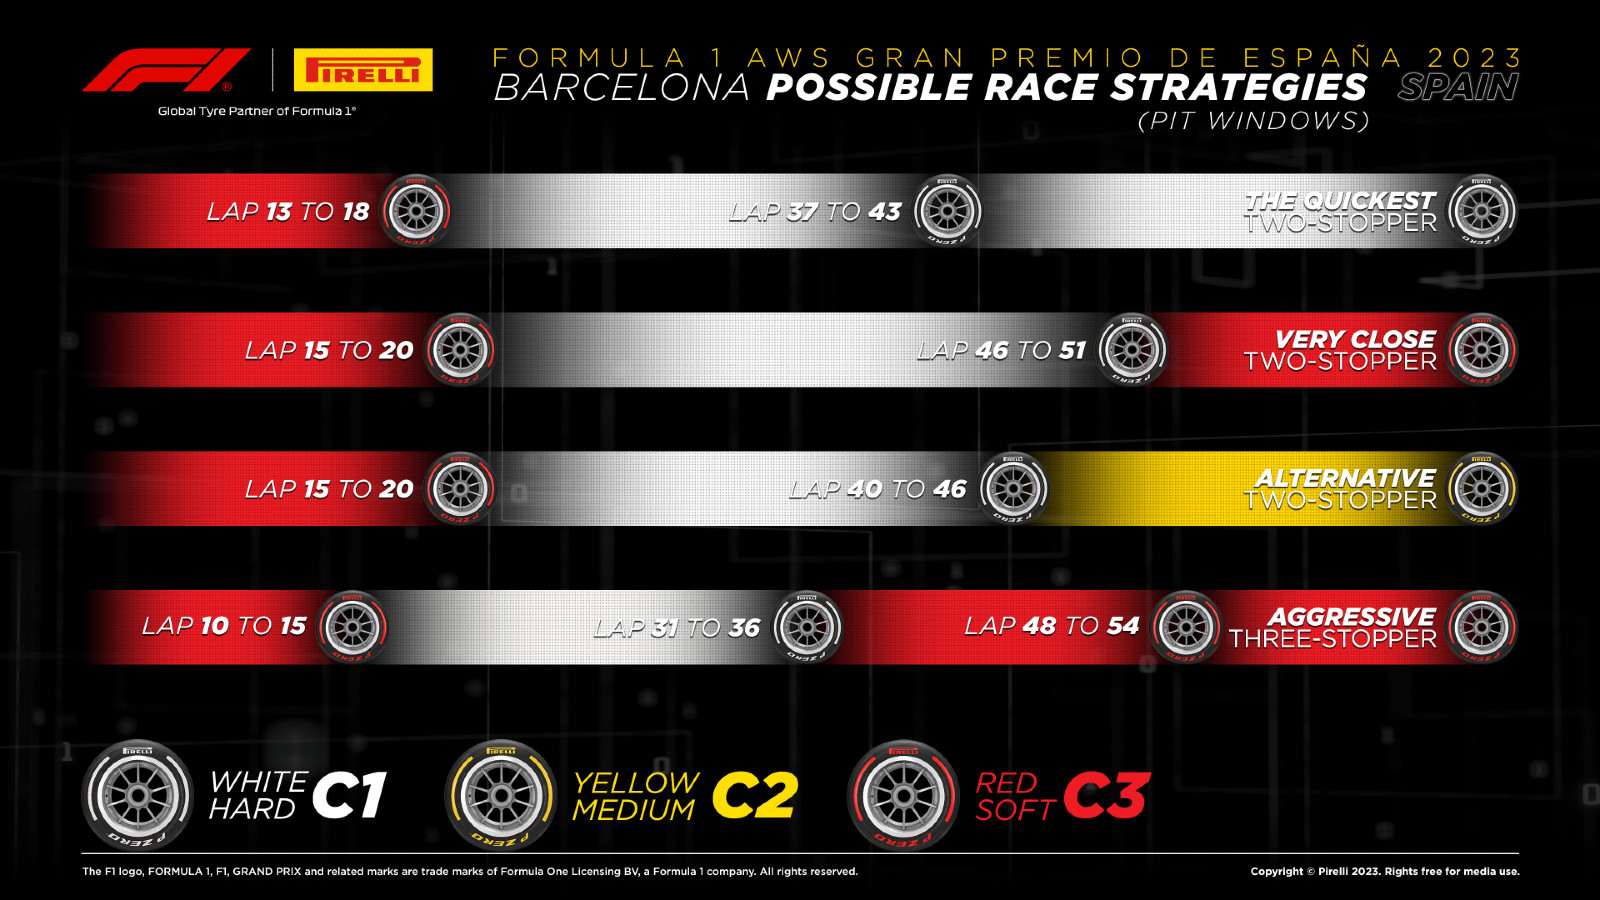 Pirelli race strategies for the Spanish Grand Prix. Barcelona, June 2023.